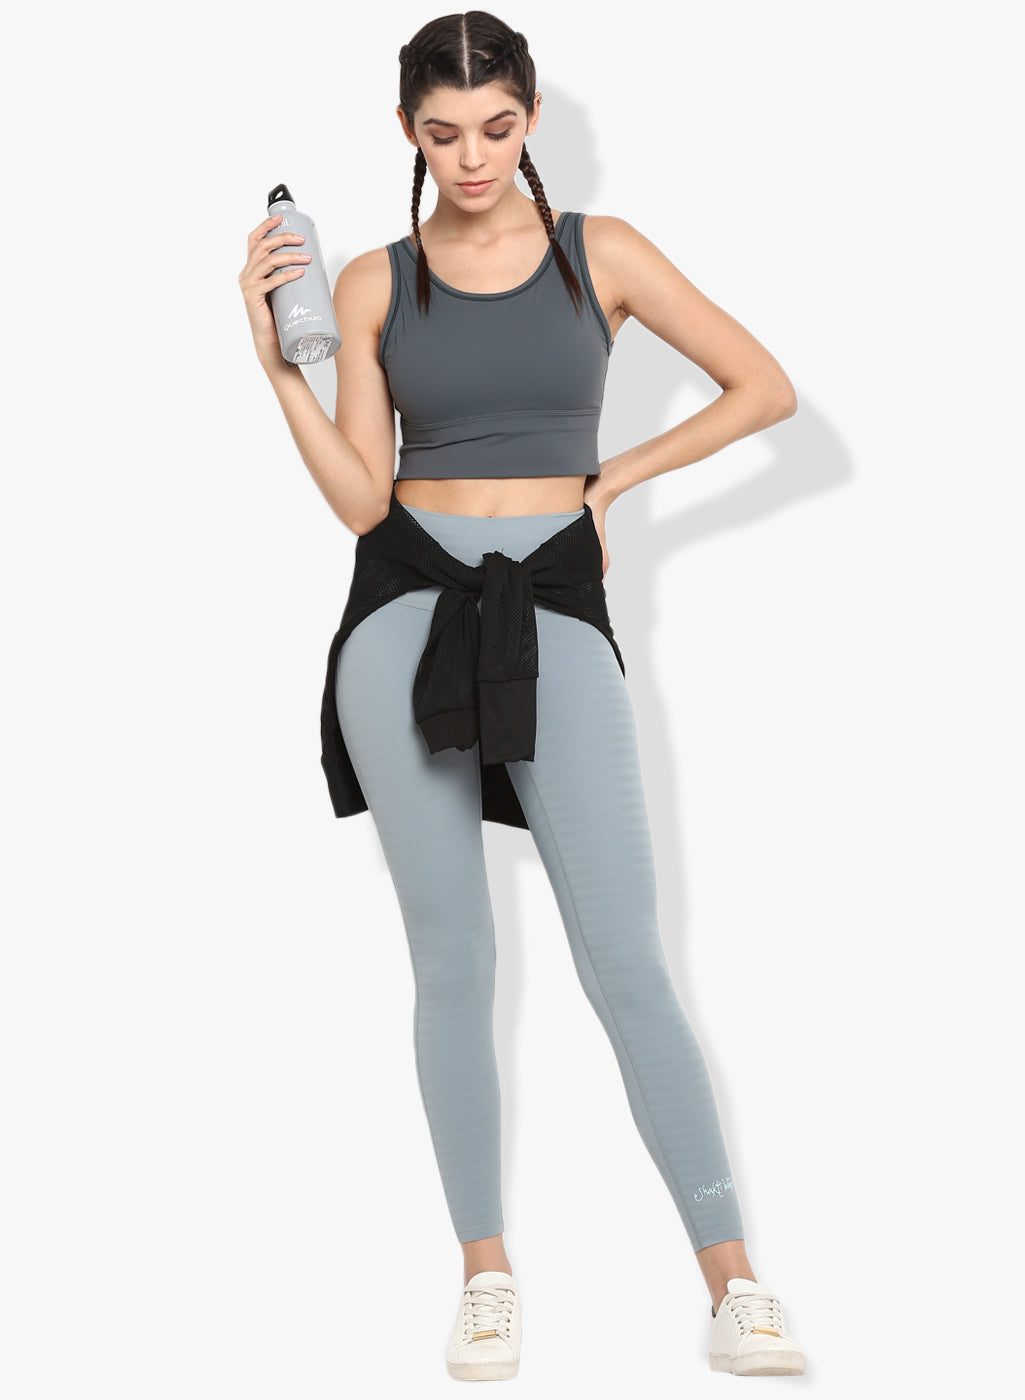 Everlast Animal Print Yoga Pants Leggings Jogging Exercise Sports Size XS